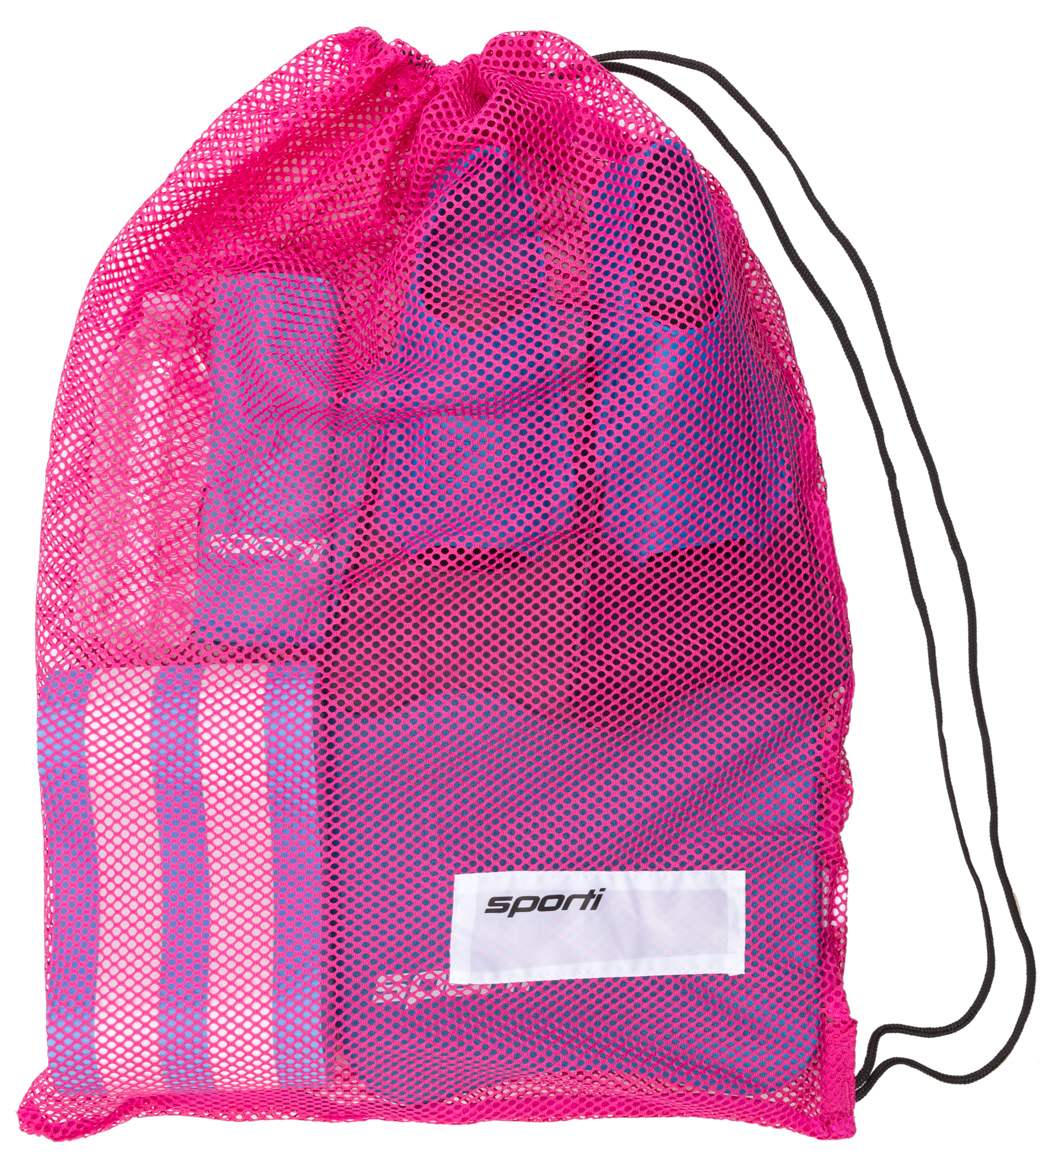 Sporti Mesh Bag - Pink Polyester - Swimoutlet.com